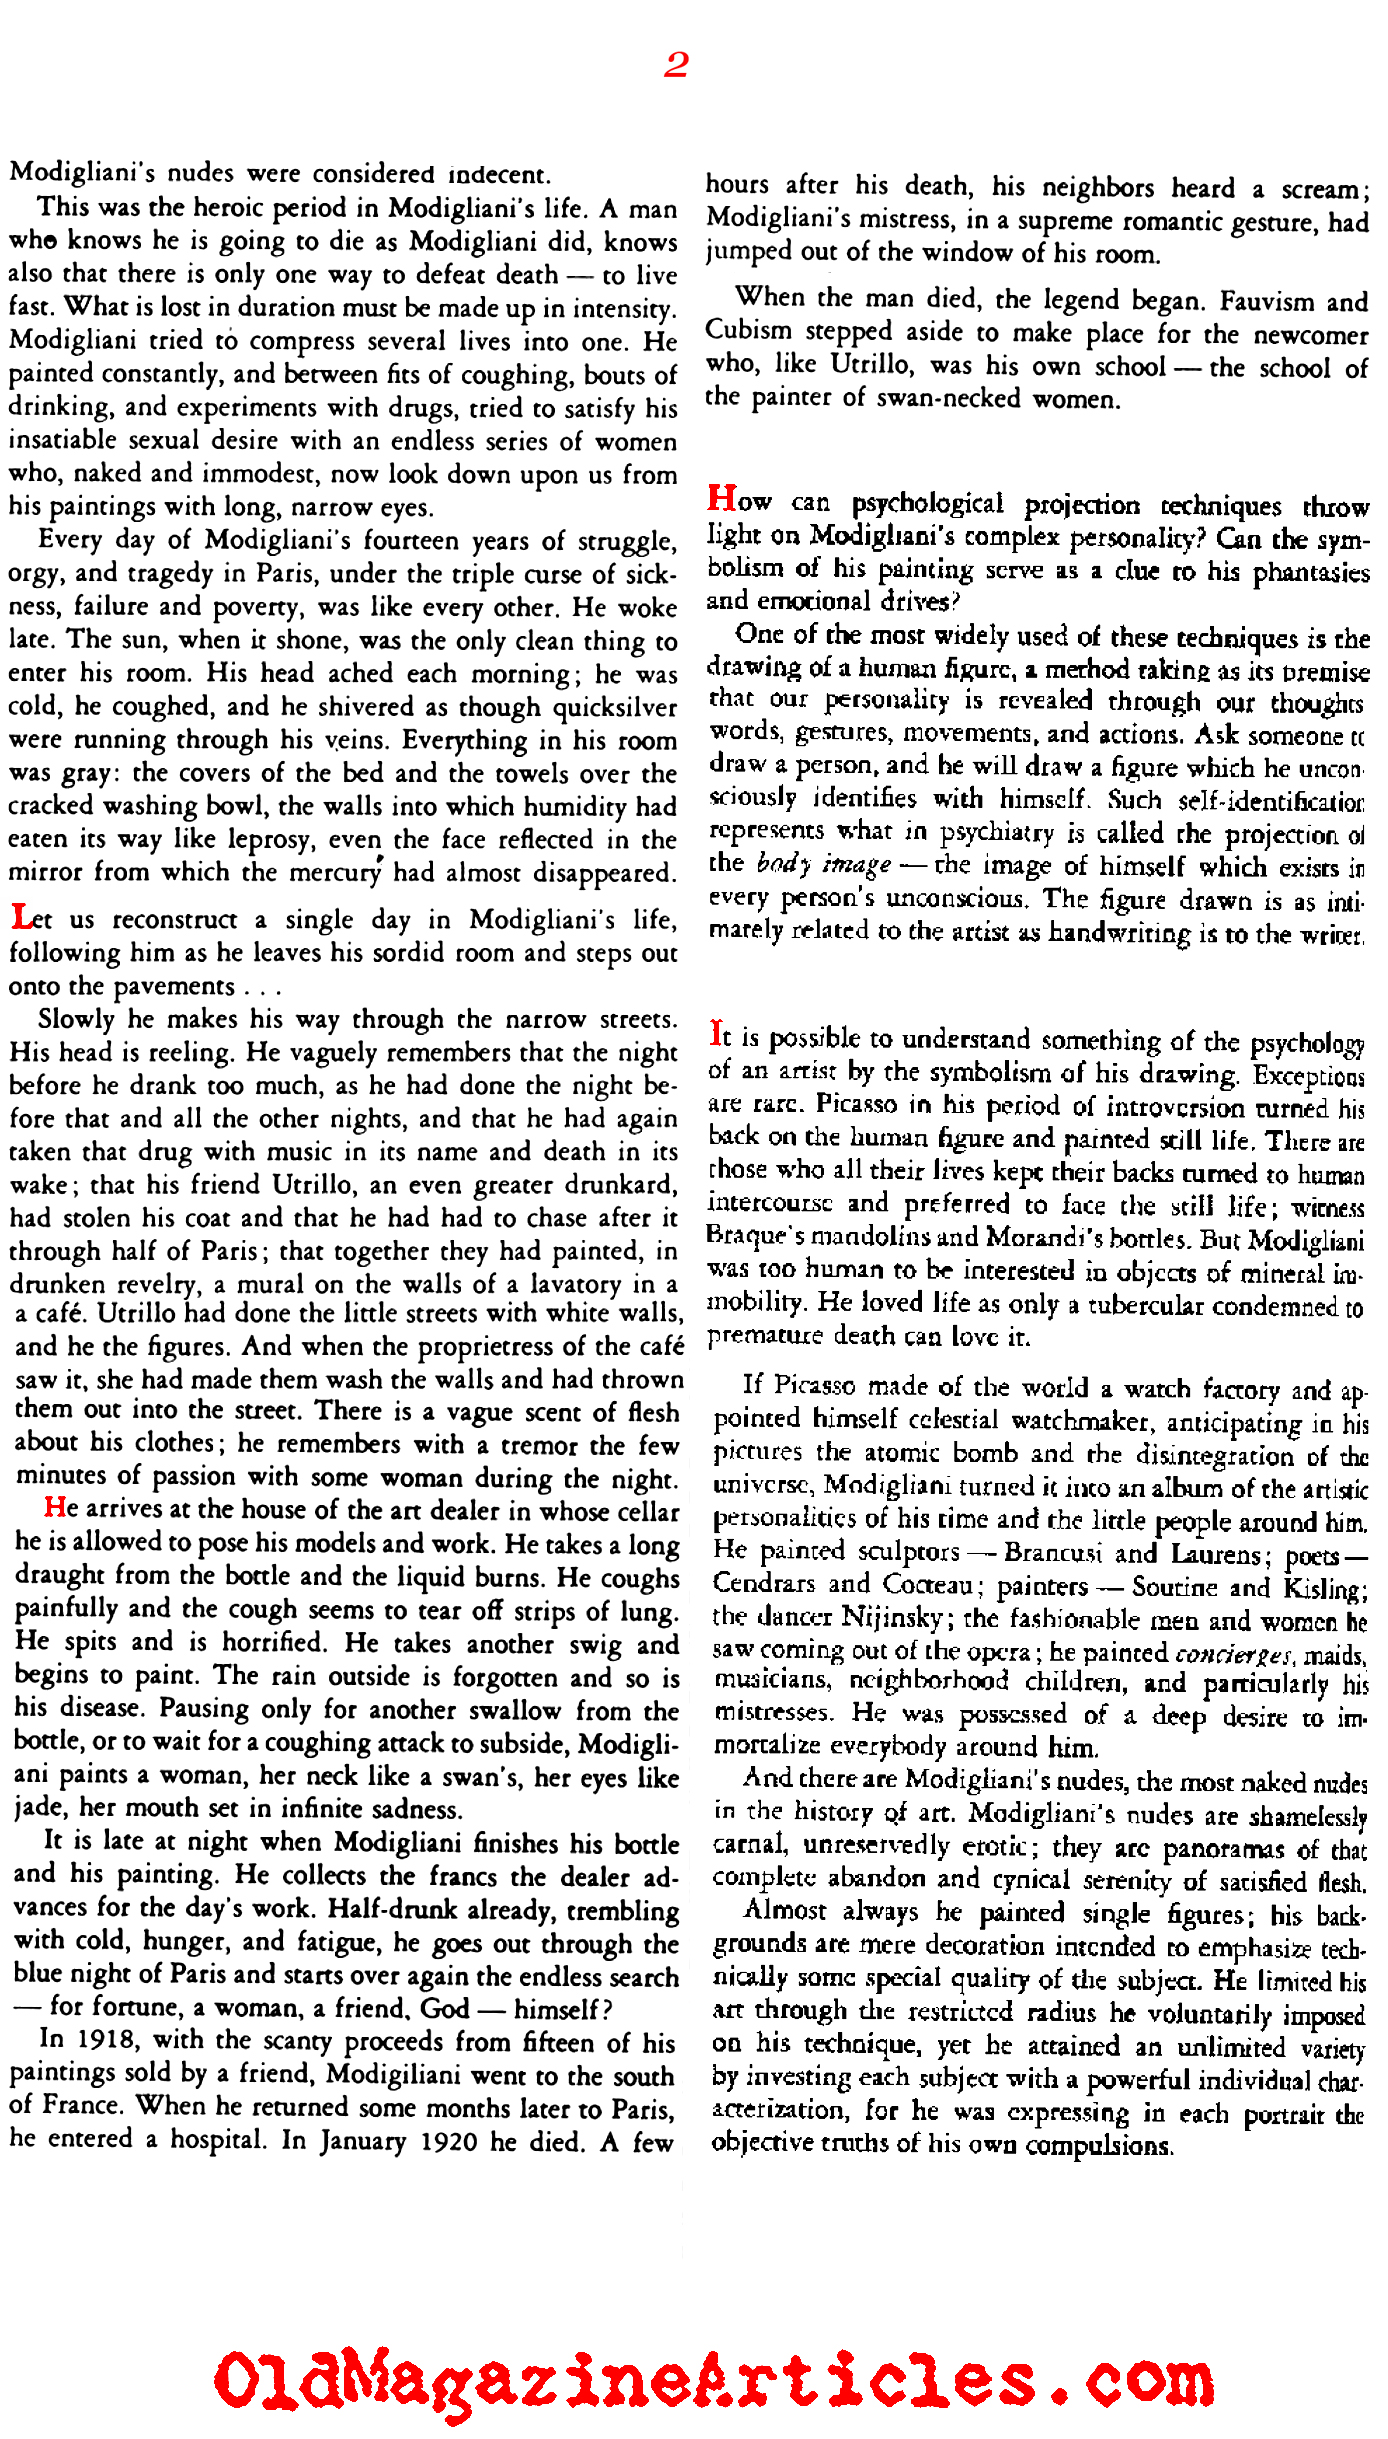 The Psycho-Sexual Struggle within Amedeo Modigliani (Gentry Magazine, 1953)